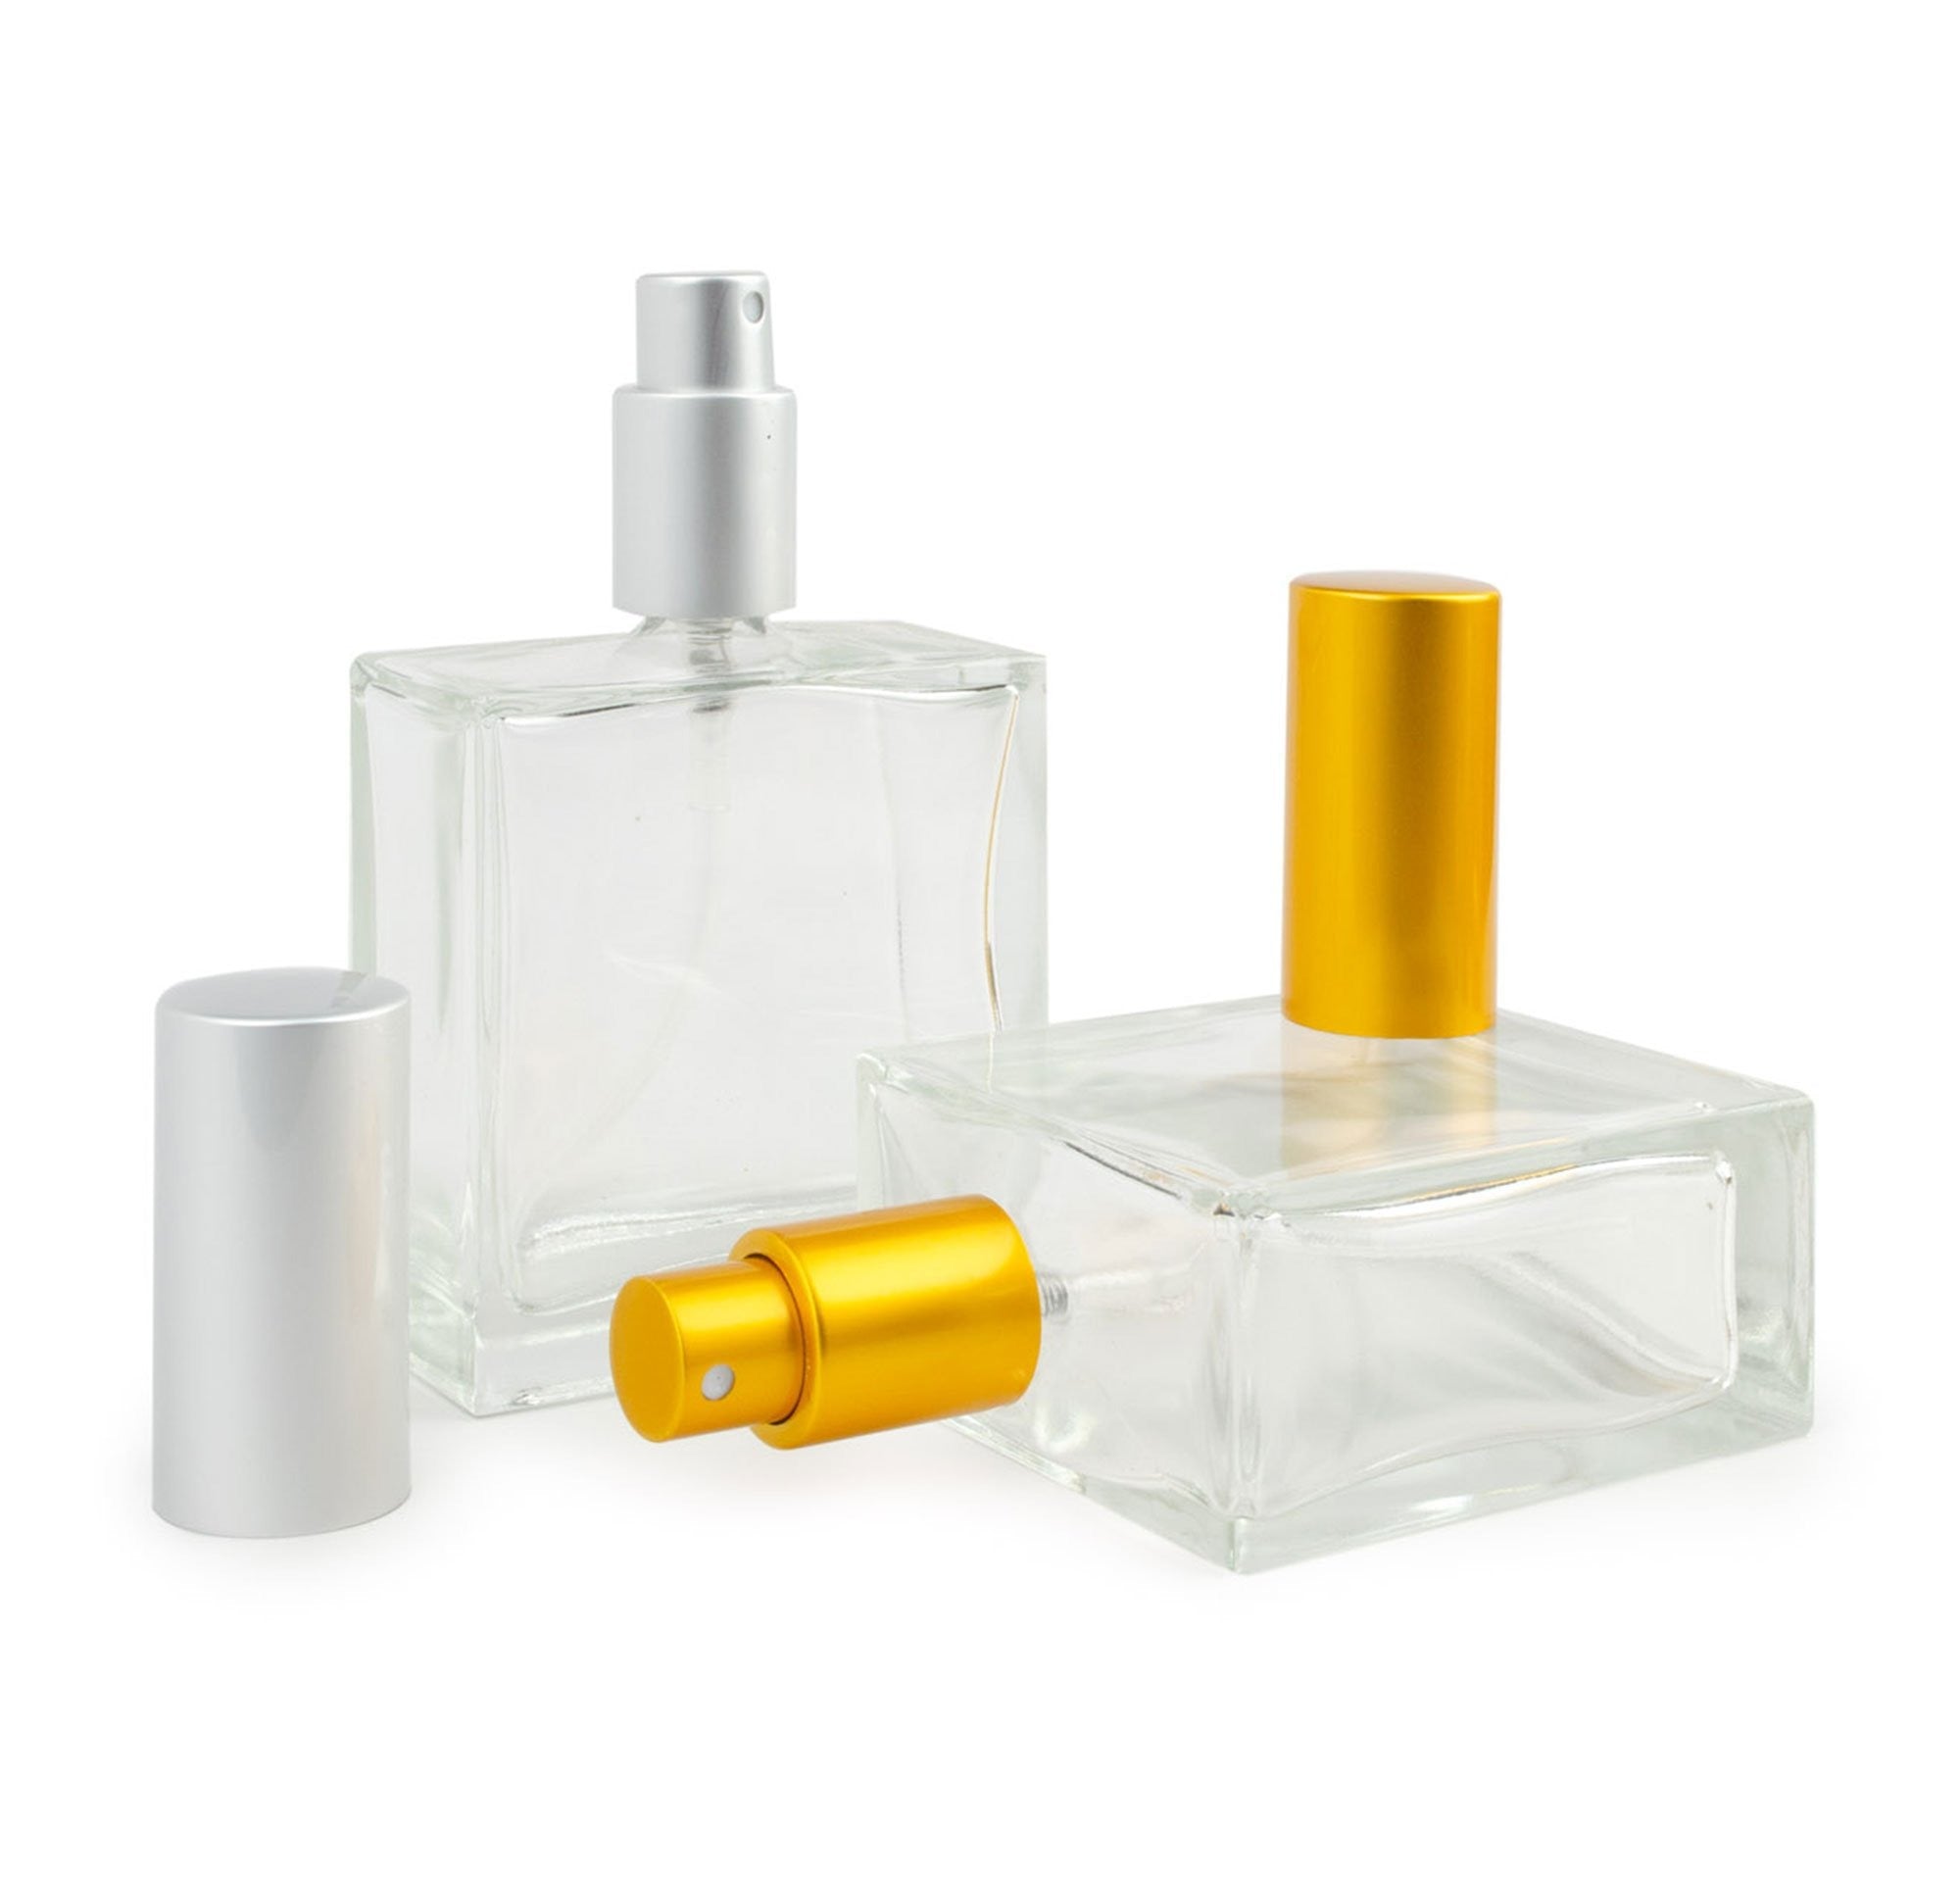 100 ml Square Glass Perfume Bottles